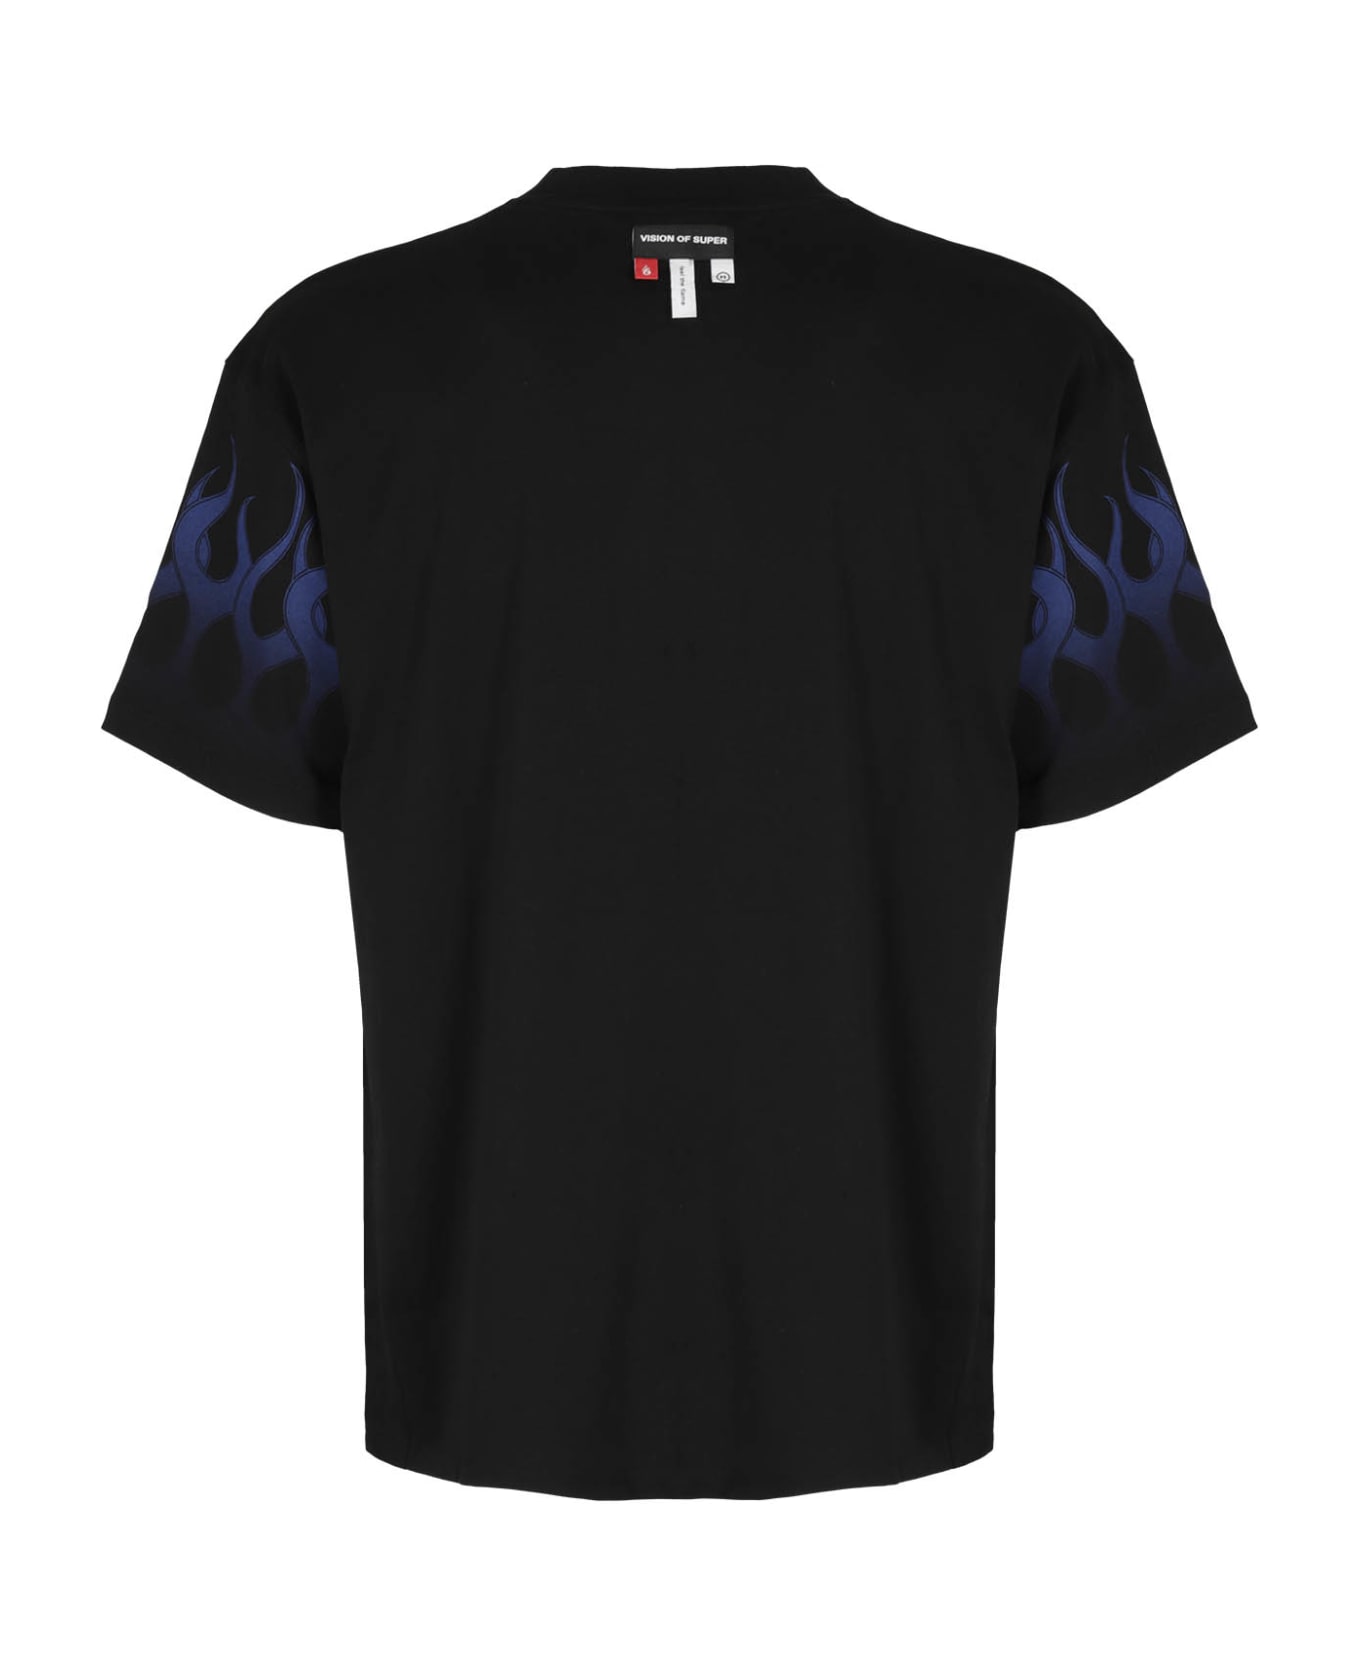 Vision of Super Black Tshirt With Blue Flames - Black Blue シャツ